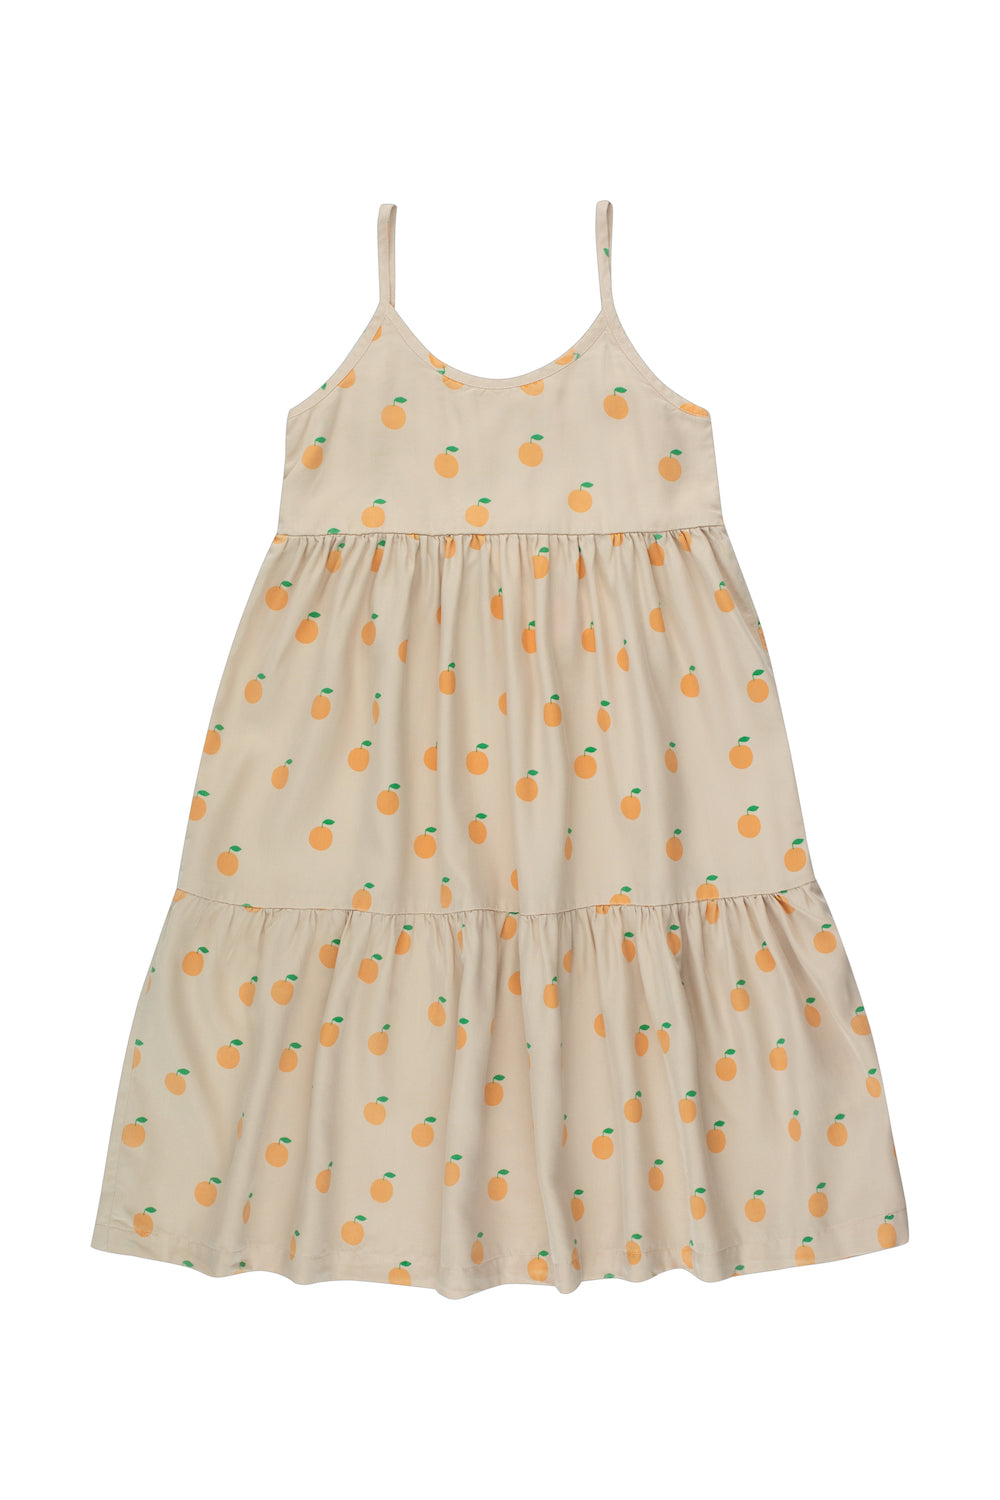 Tiny Cottons Oranges Strap Dress - Dark Vanilla/Orange